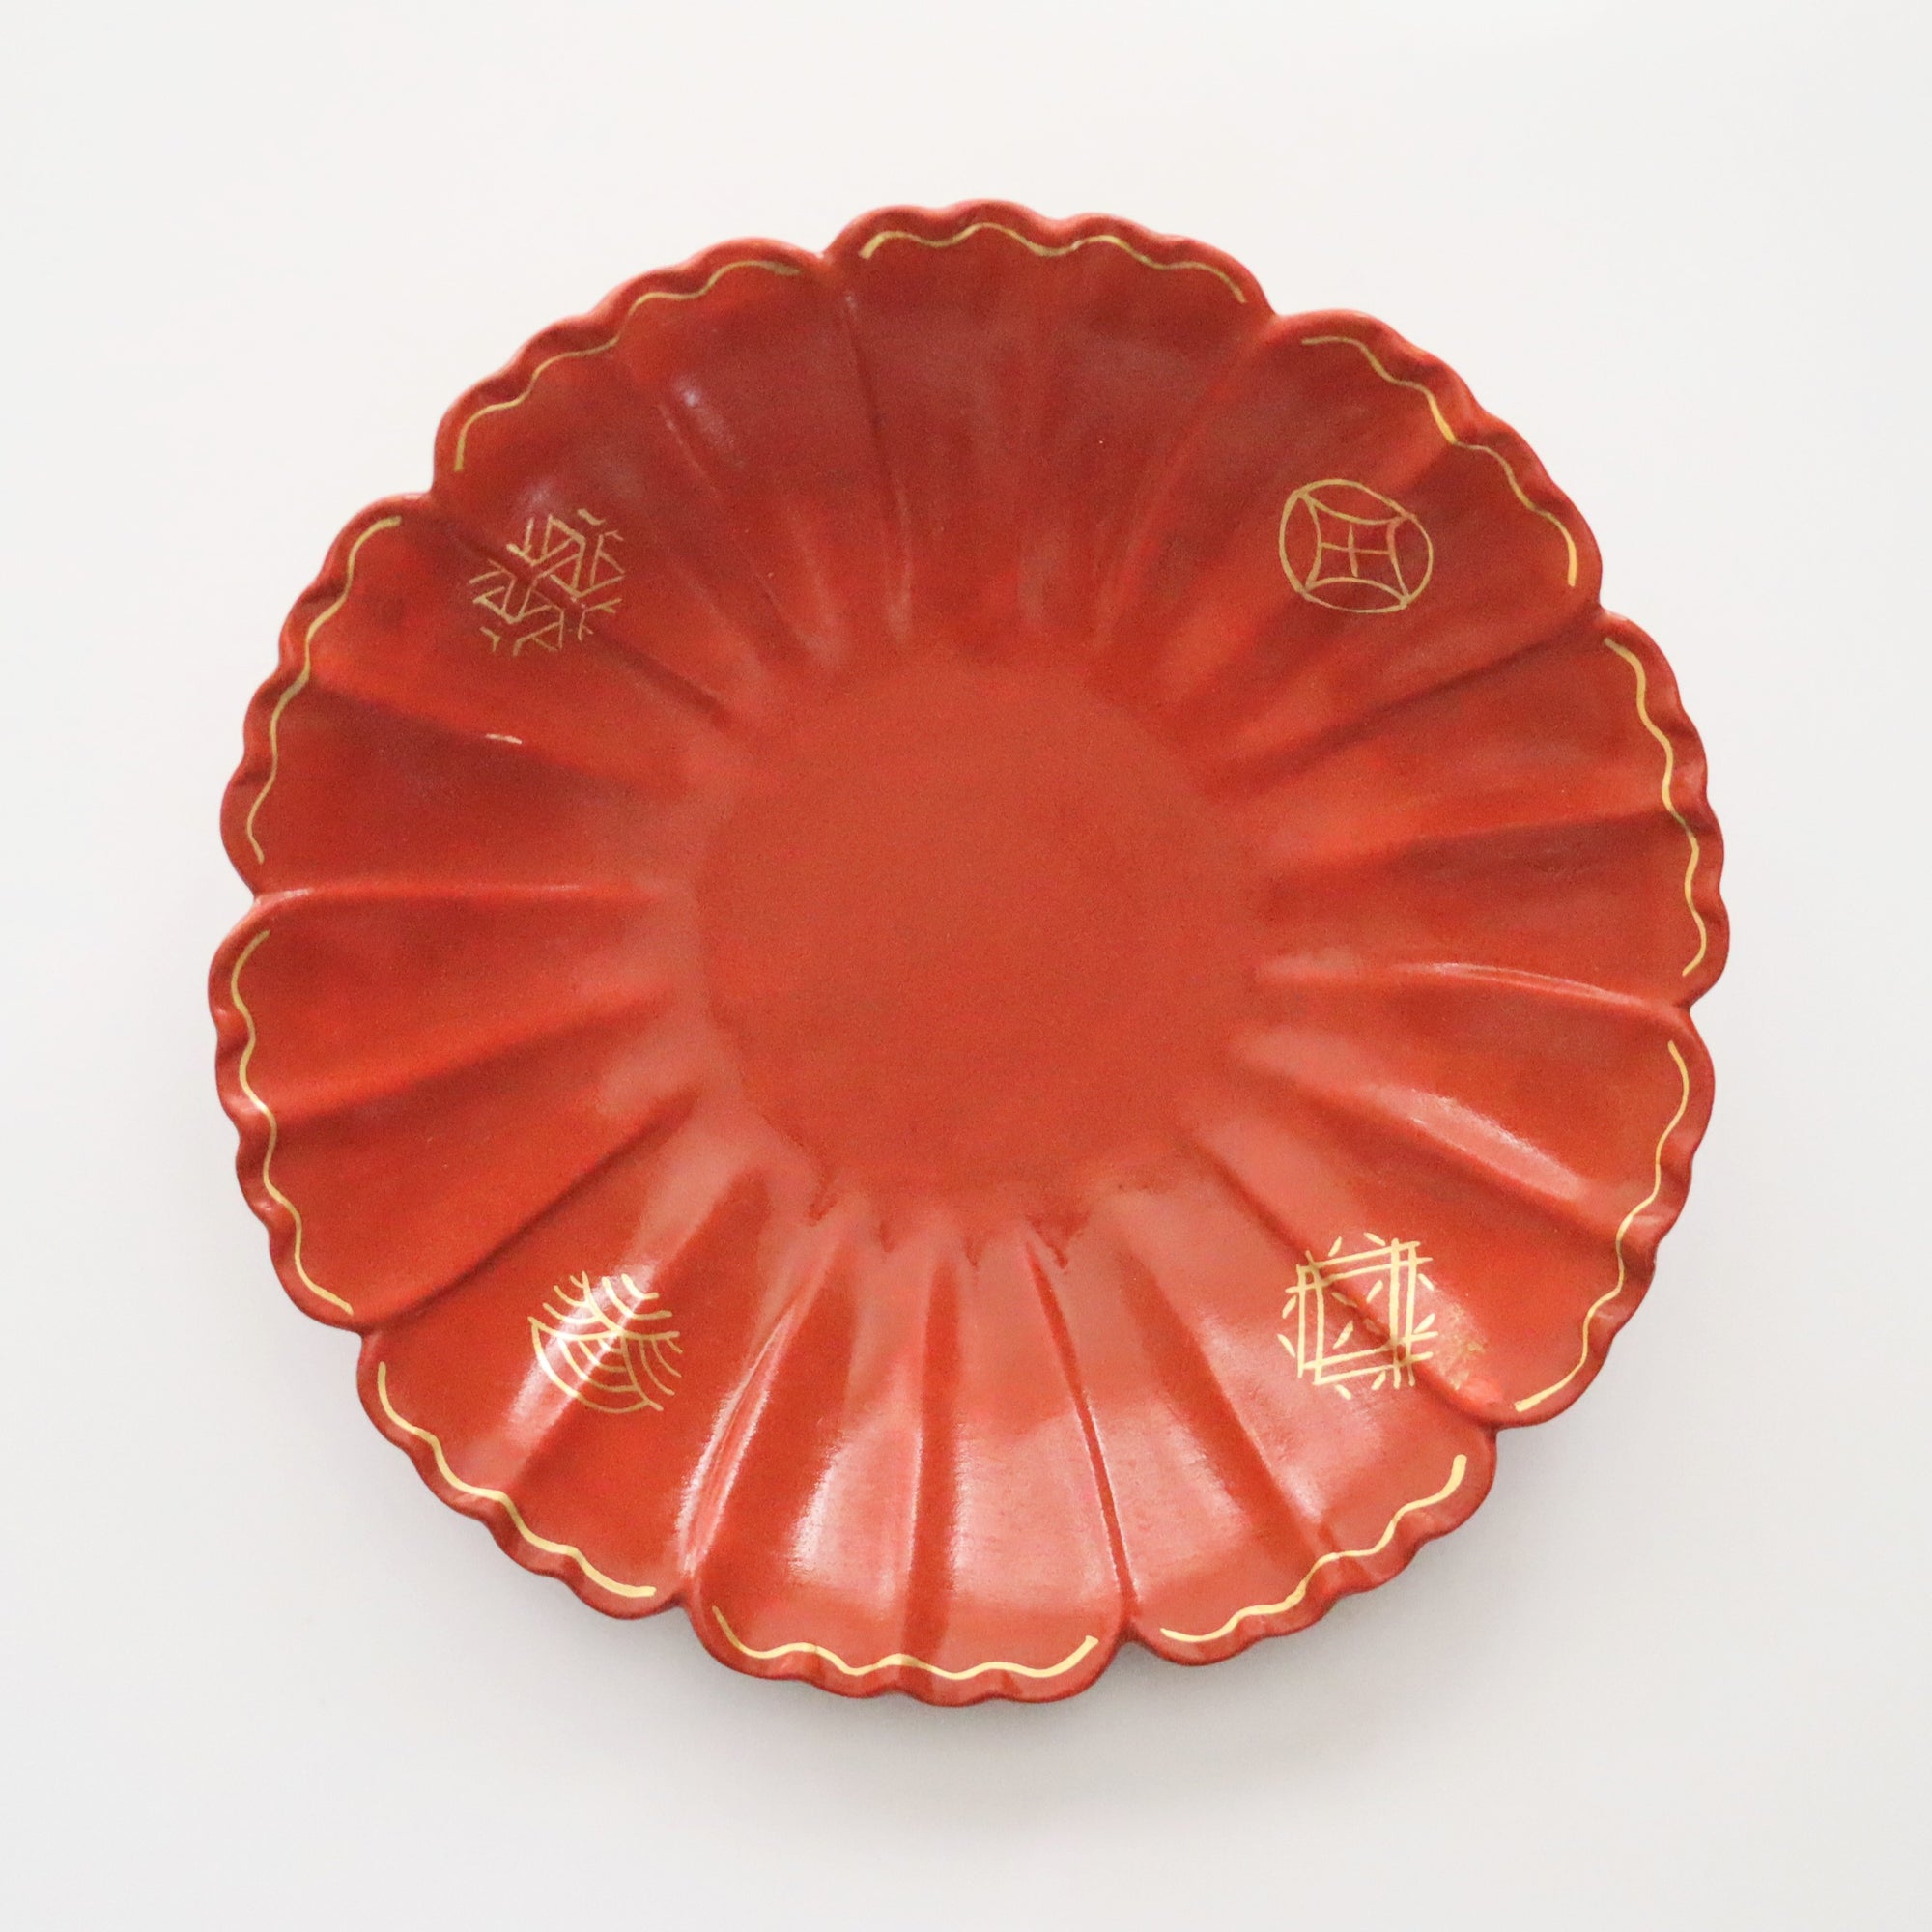 5.5 plates of brocade-red brocade pattern